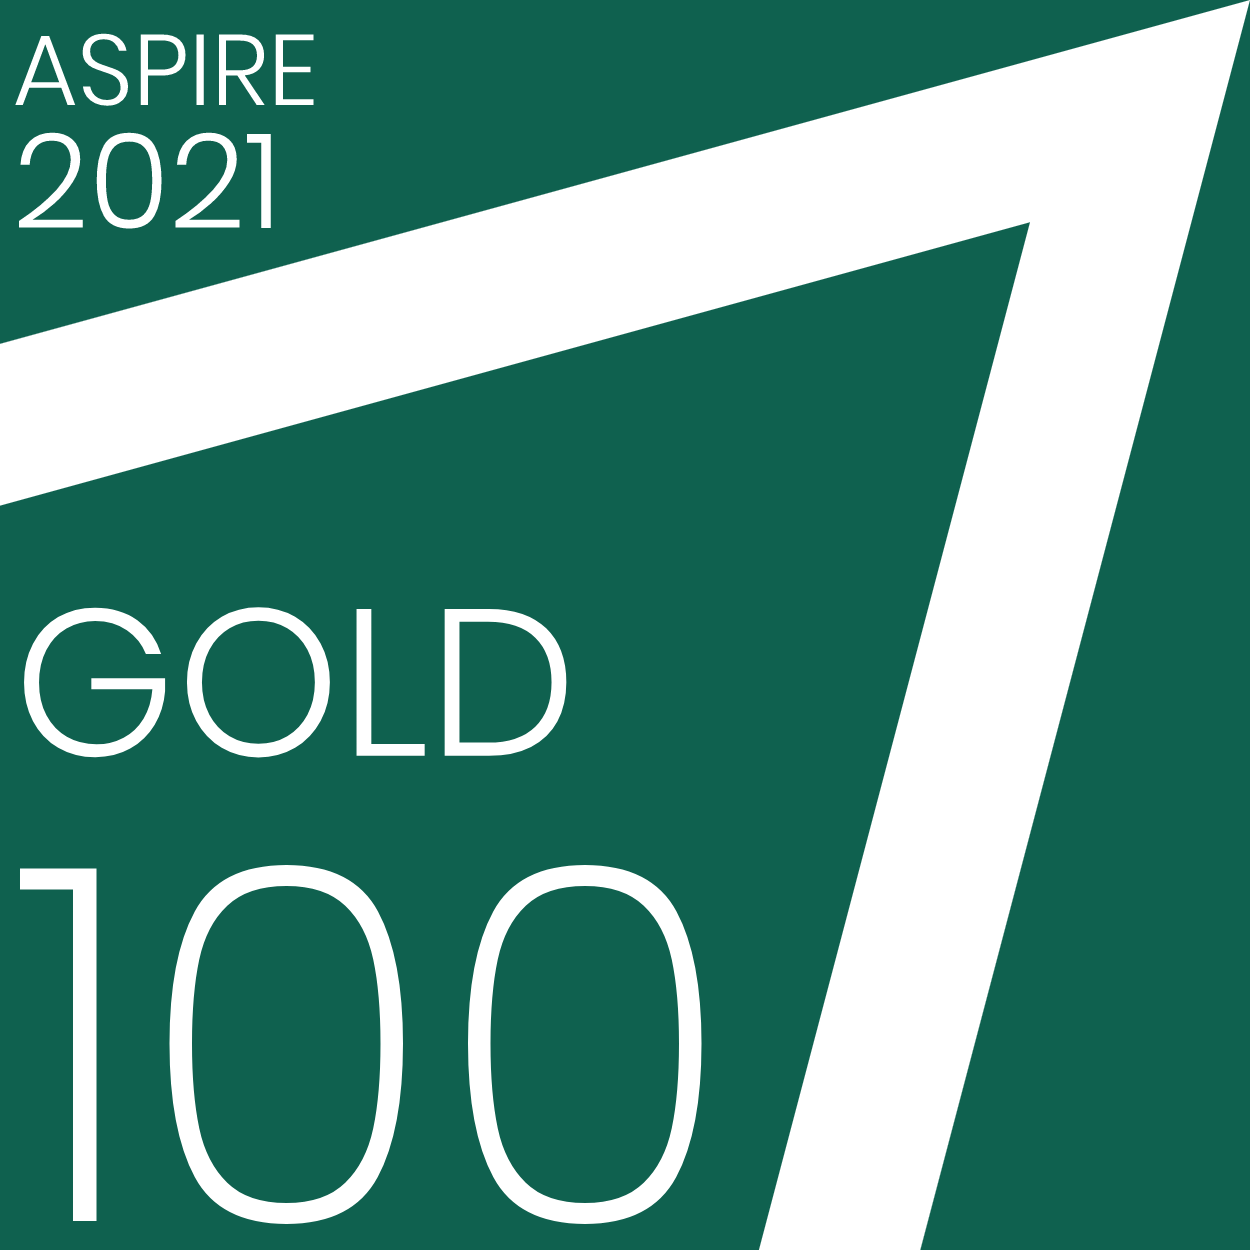 Aspire 2021 accreditation - Gold 94%